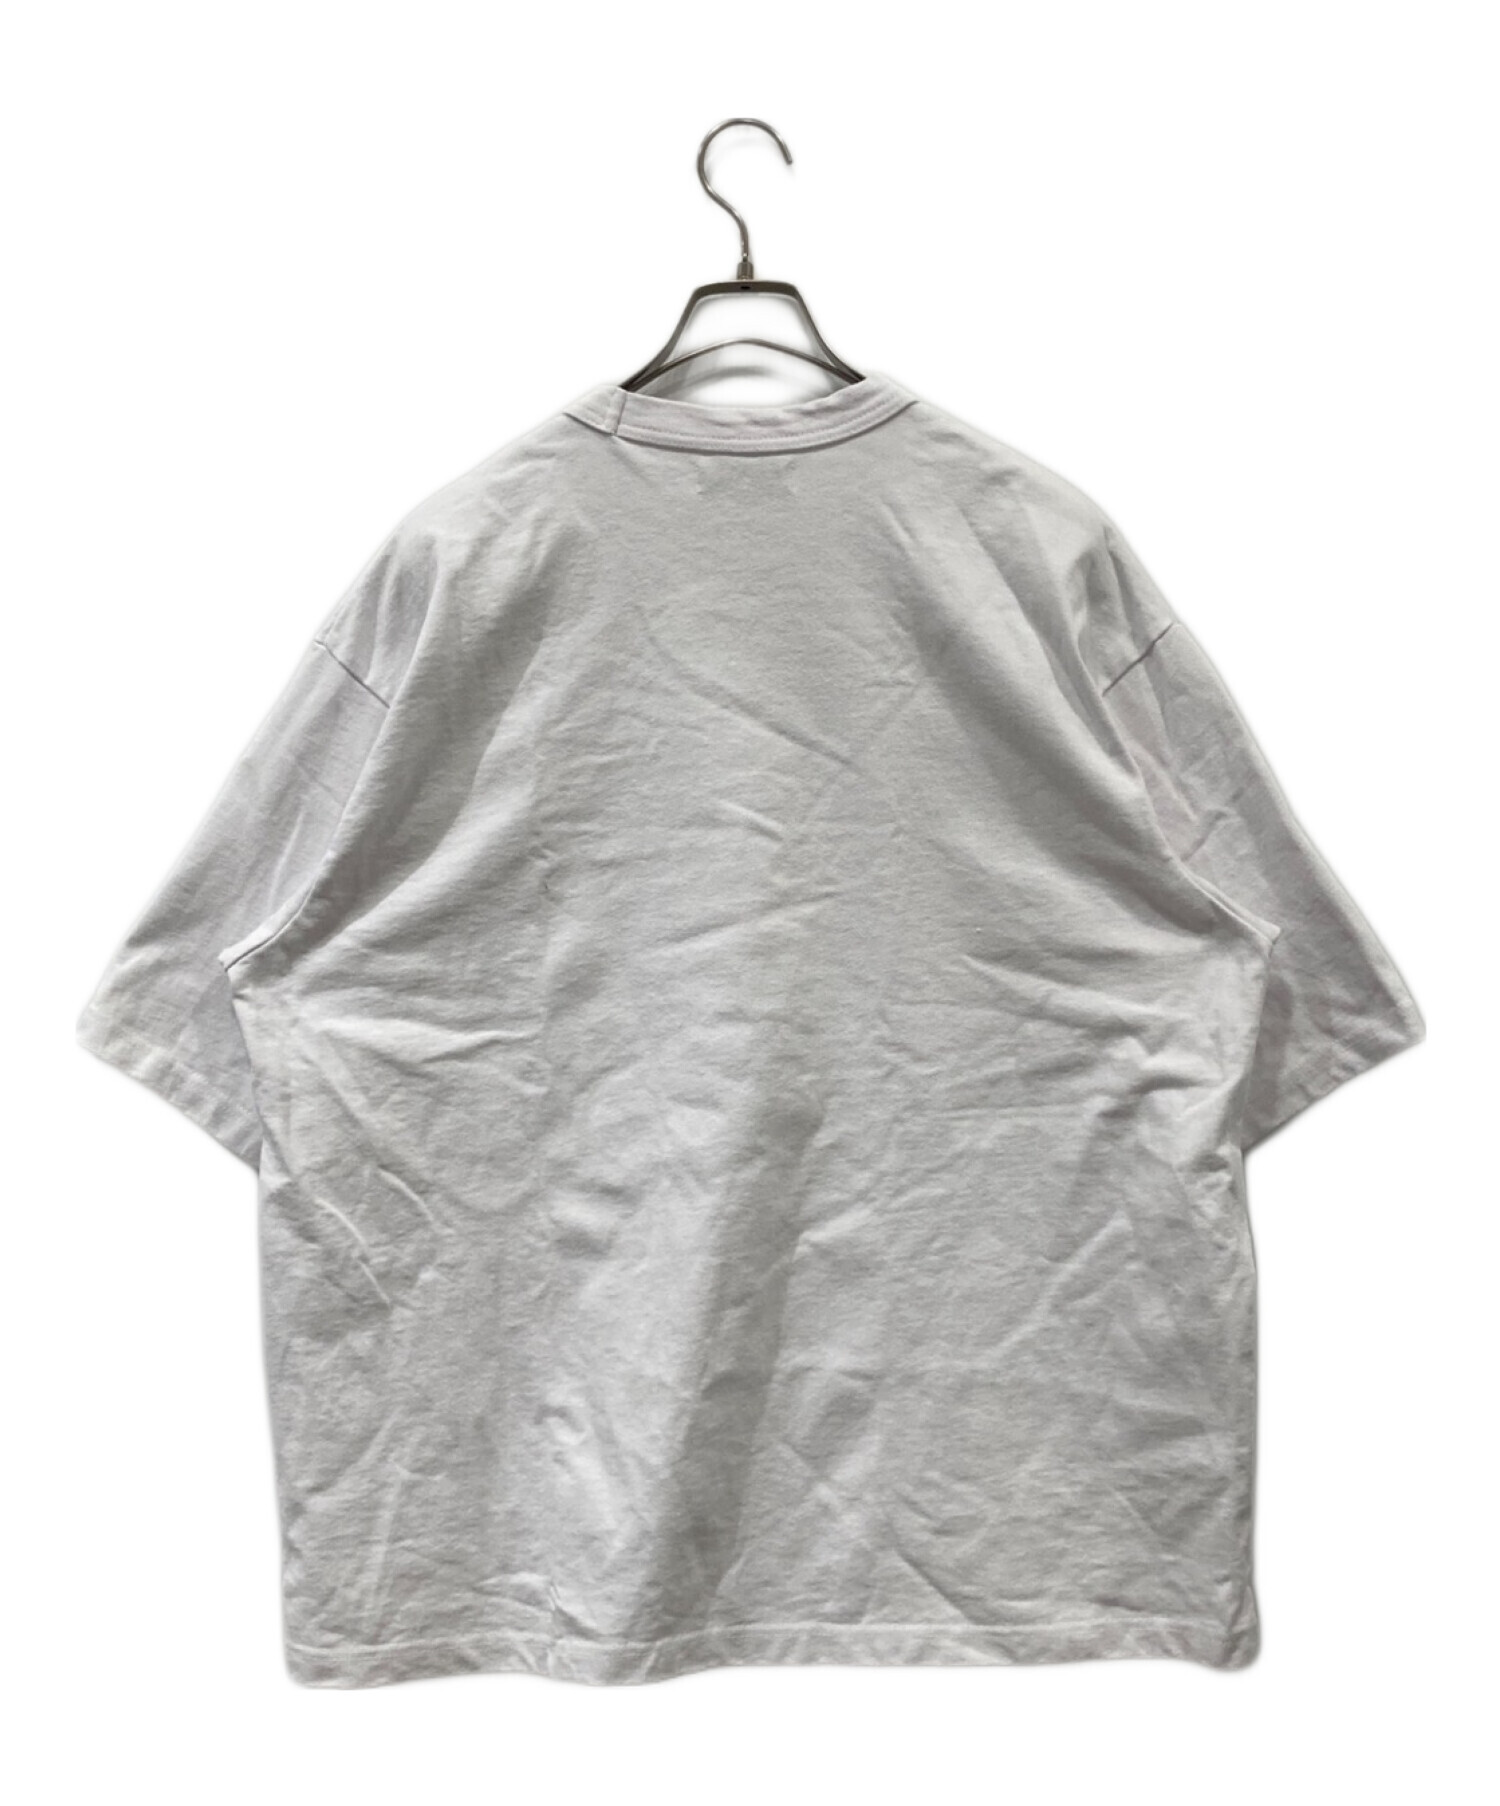 CAHLUMN (カウラム) ポケットTシャツ ホワイト サイズ:S